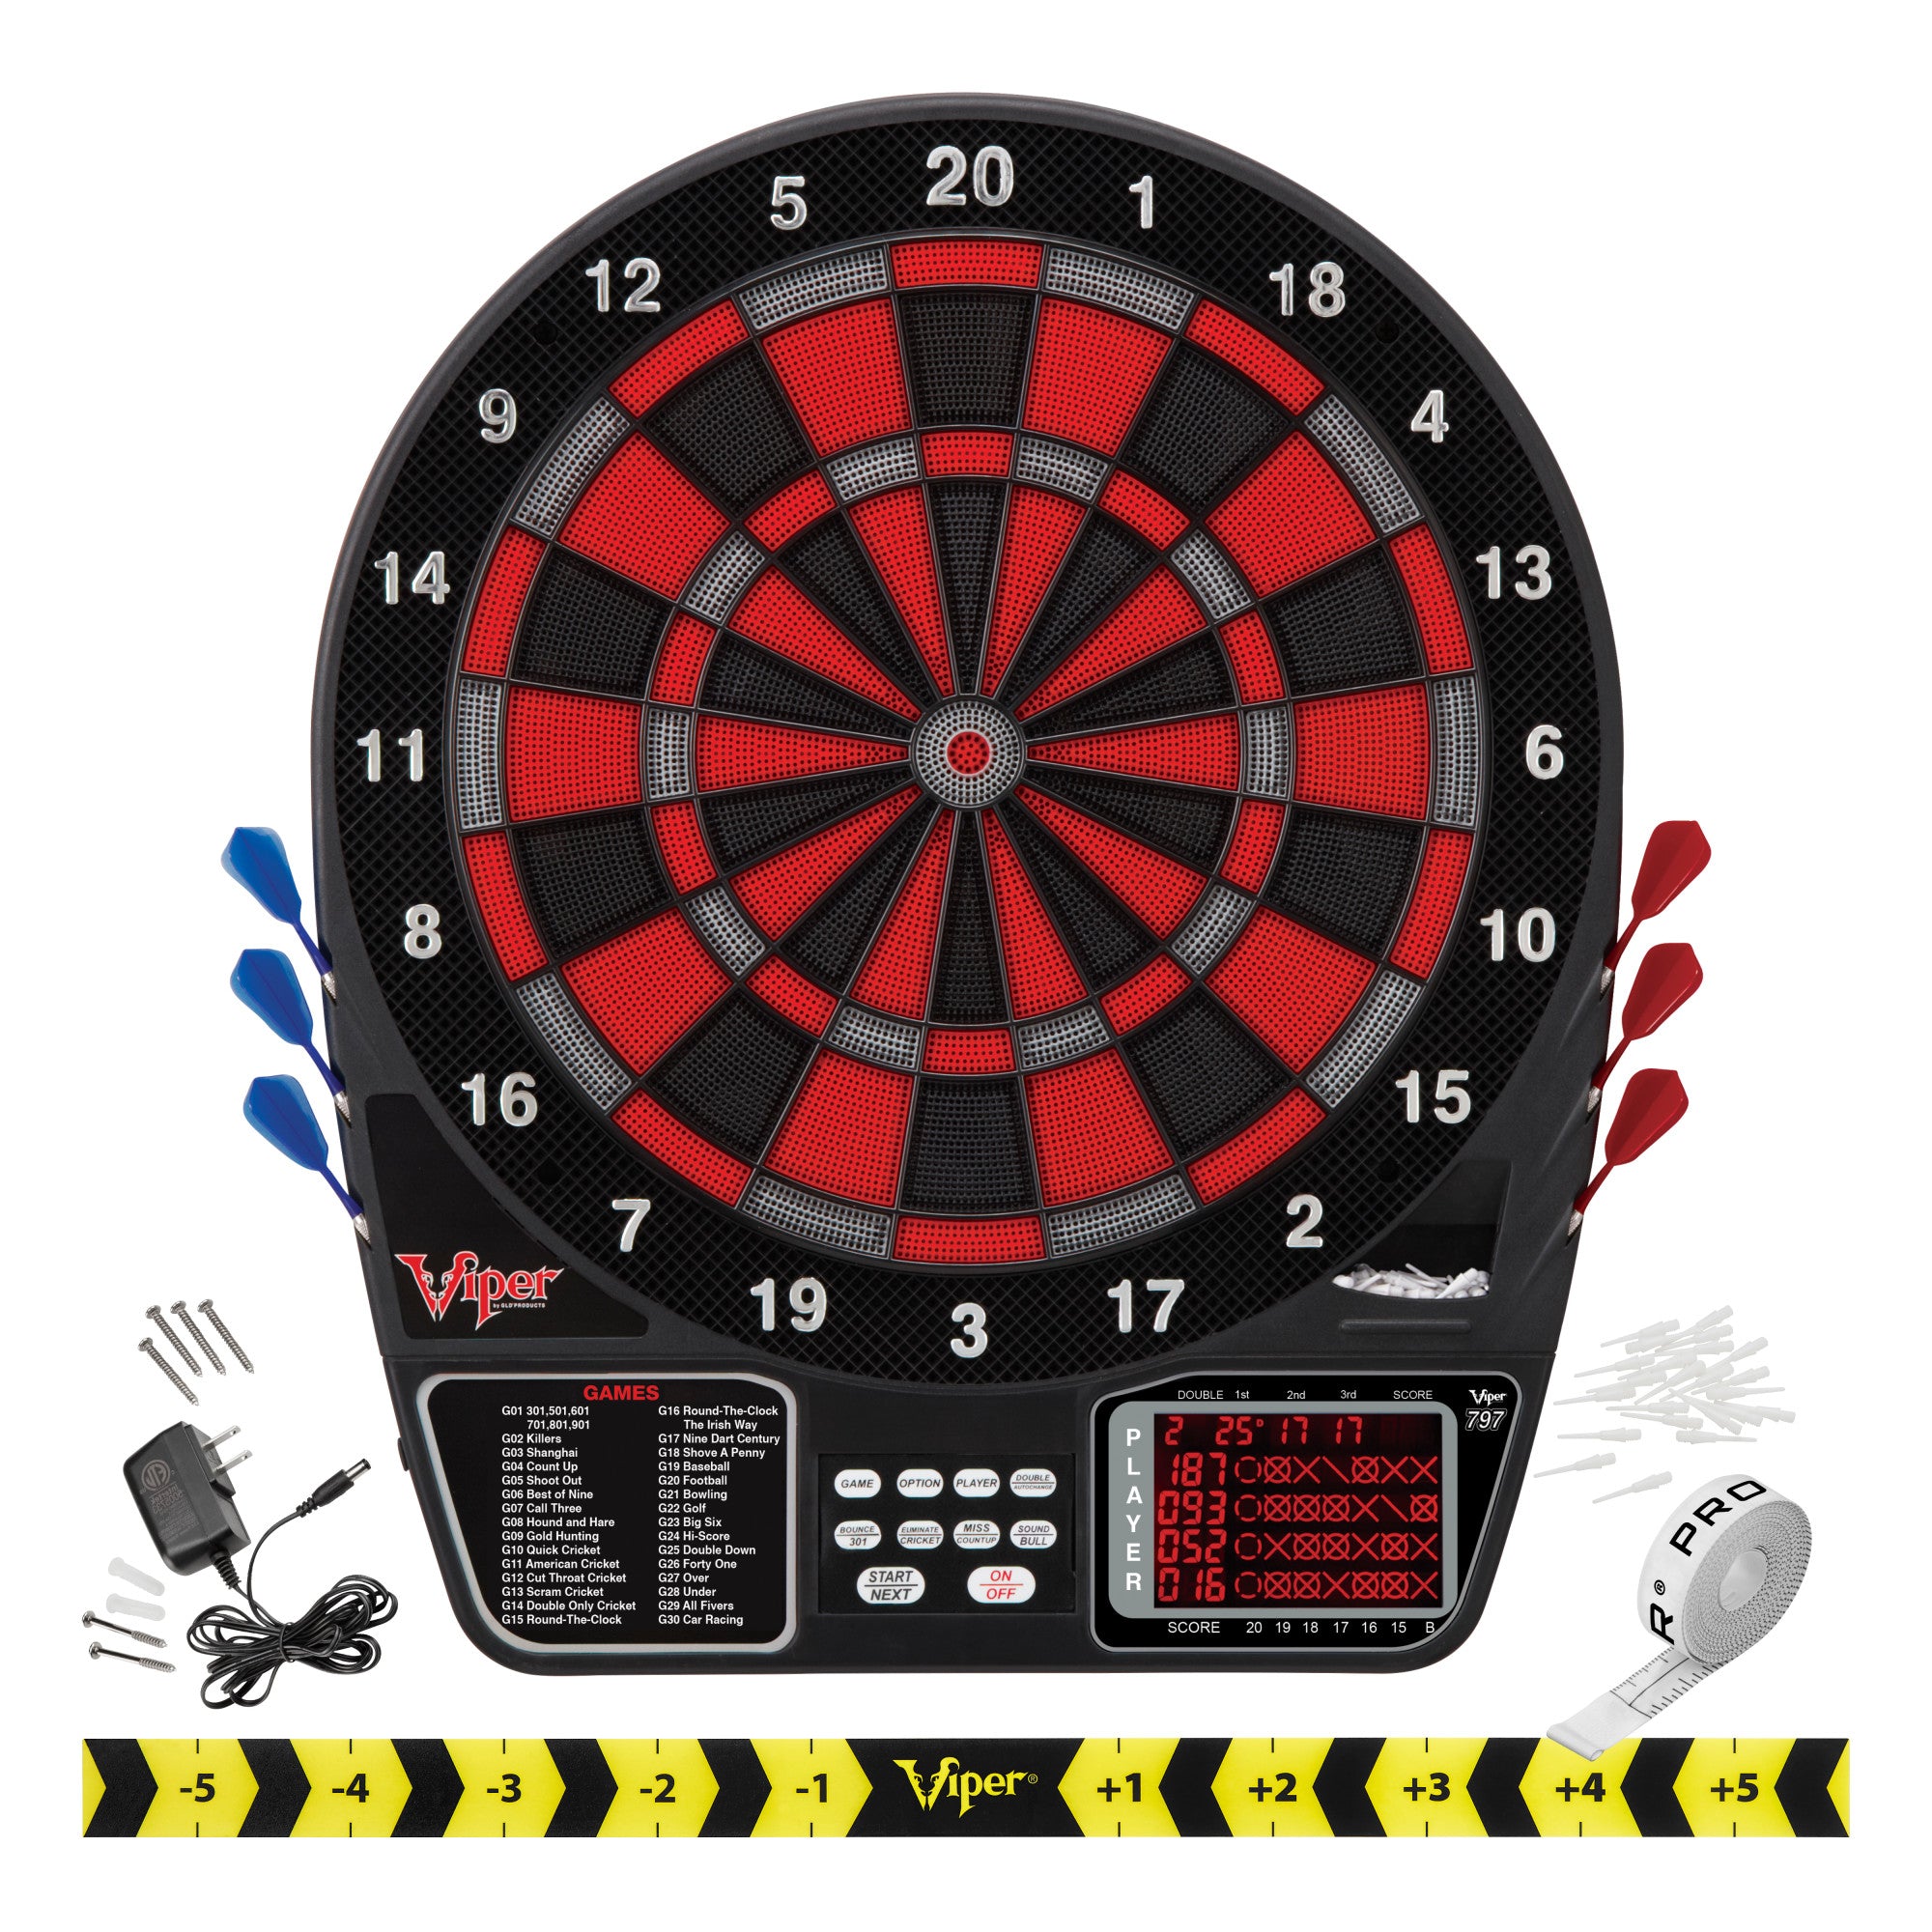 Viper 797 Electronic Dartboard, 15.5" Regulation Target